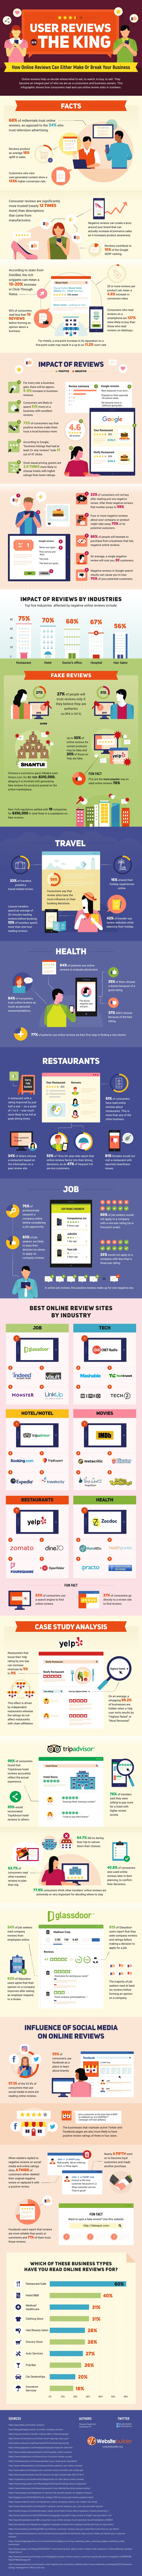 iHomefinder - Online Review Infographic Guest Post - 20170607